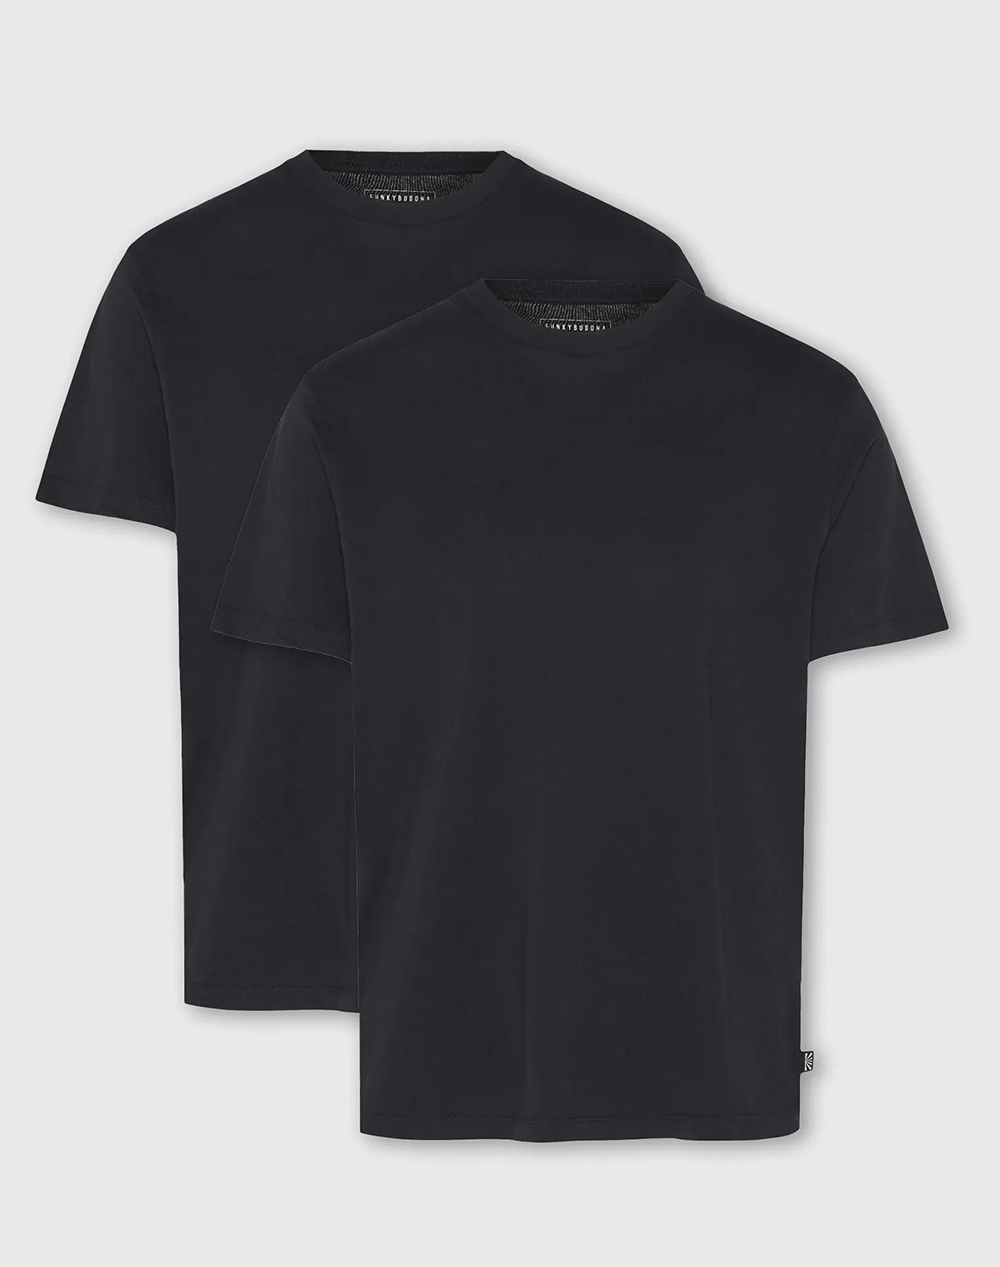 FUNKY BUDDHA Ανδρικά μονόχρωμα t-shirts (σετ 2 τεμ.) FBM009-350-04-BLACK Black